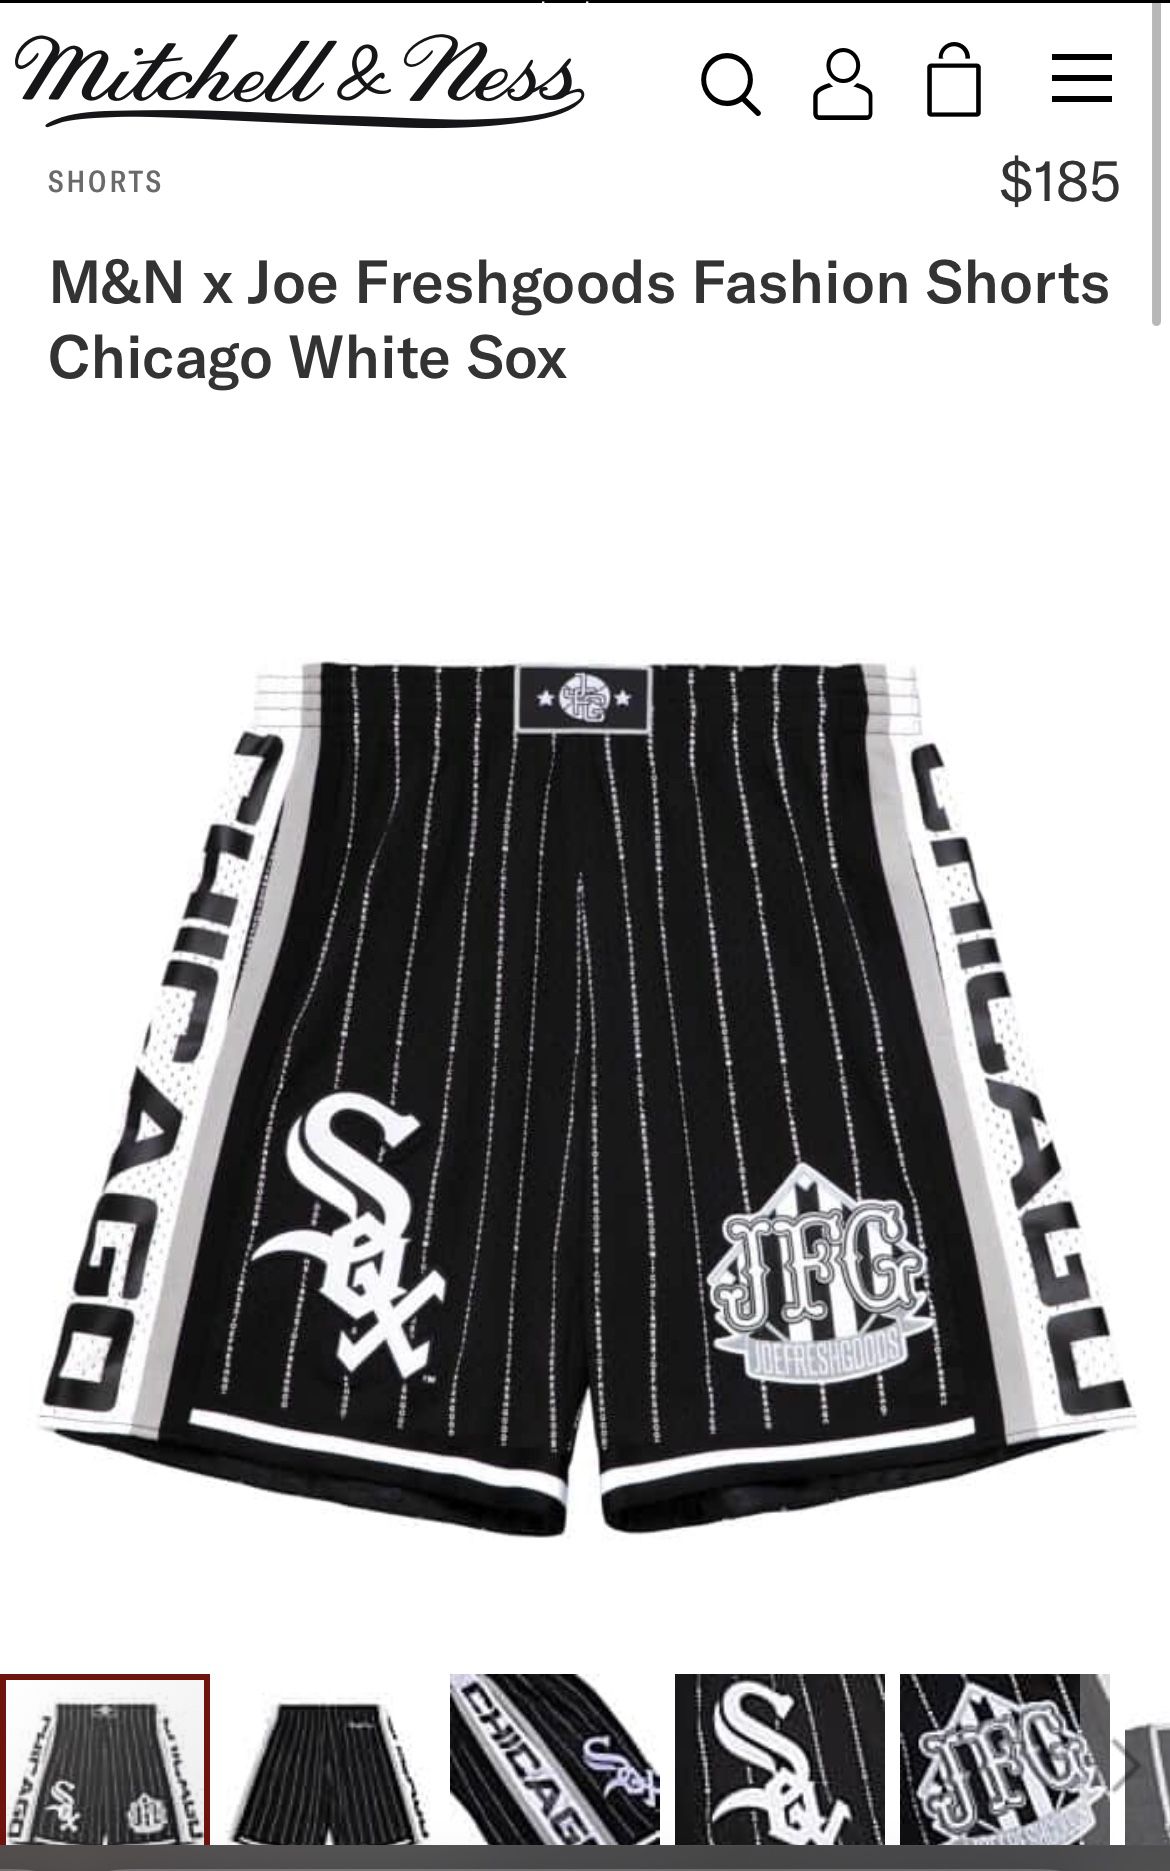 Mitchell & Ness M&N x Joe Freshgoods Fashion Shorts Chicago White Sox